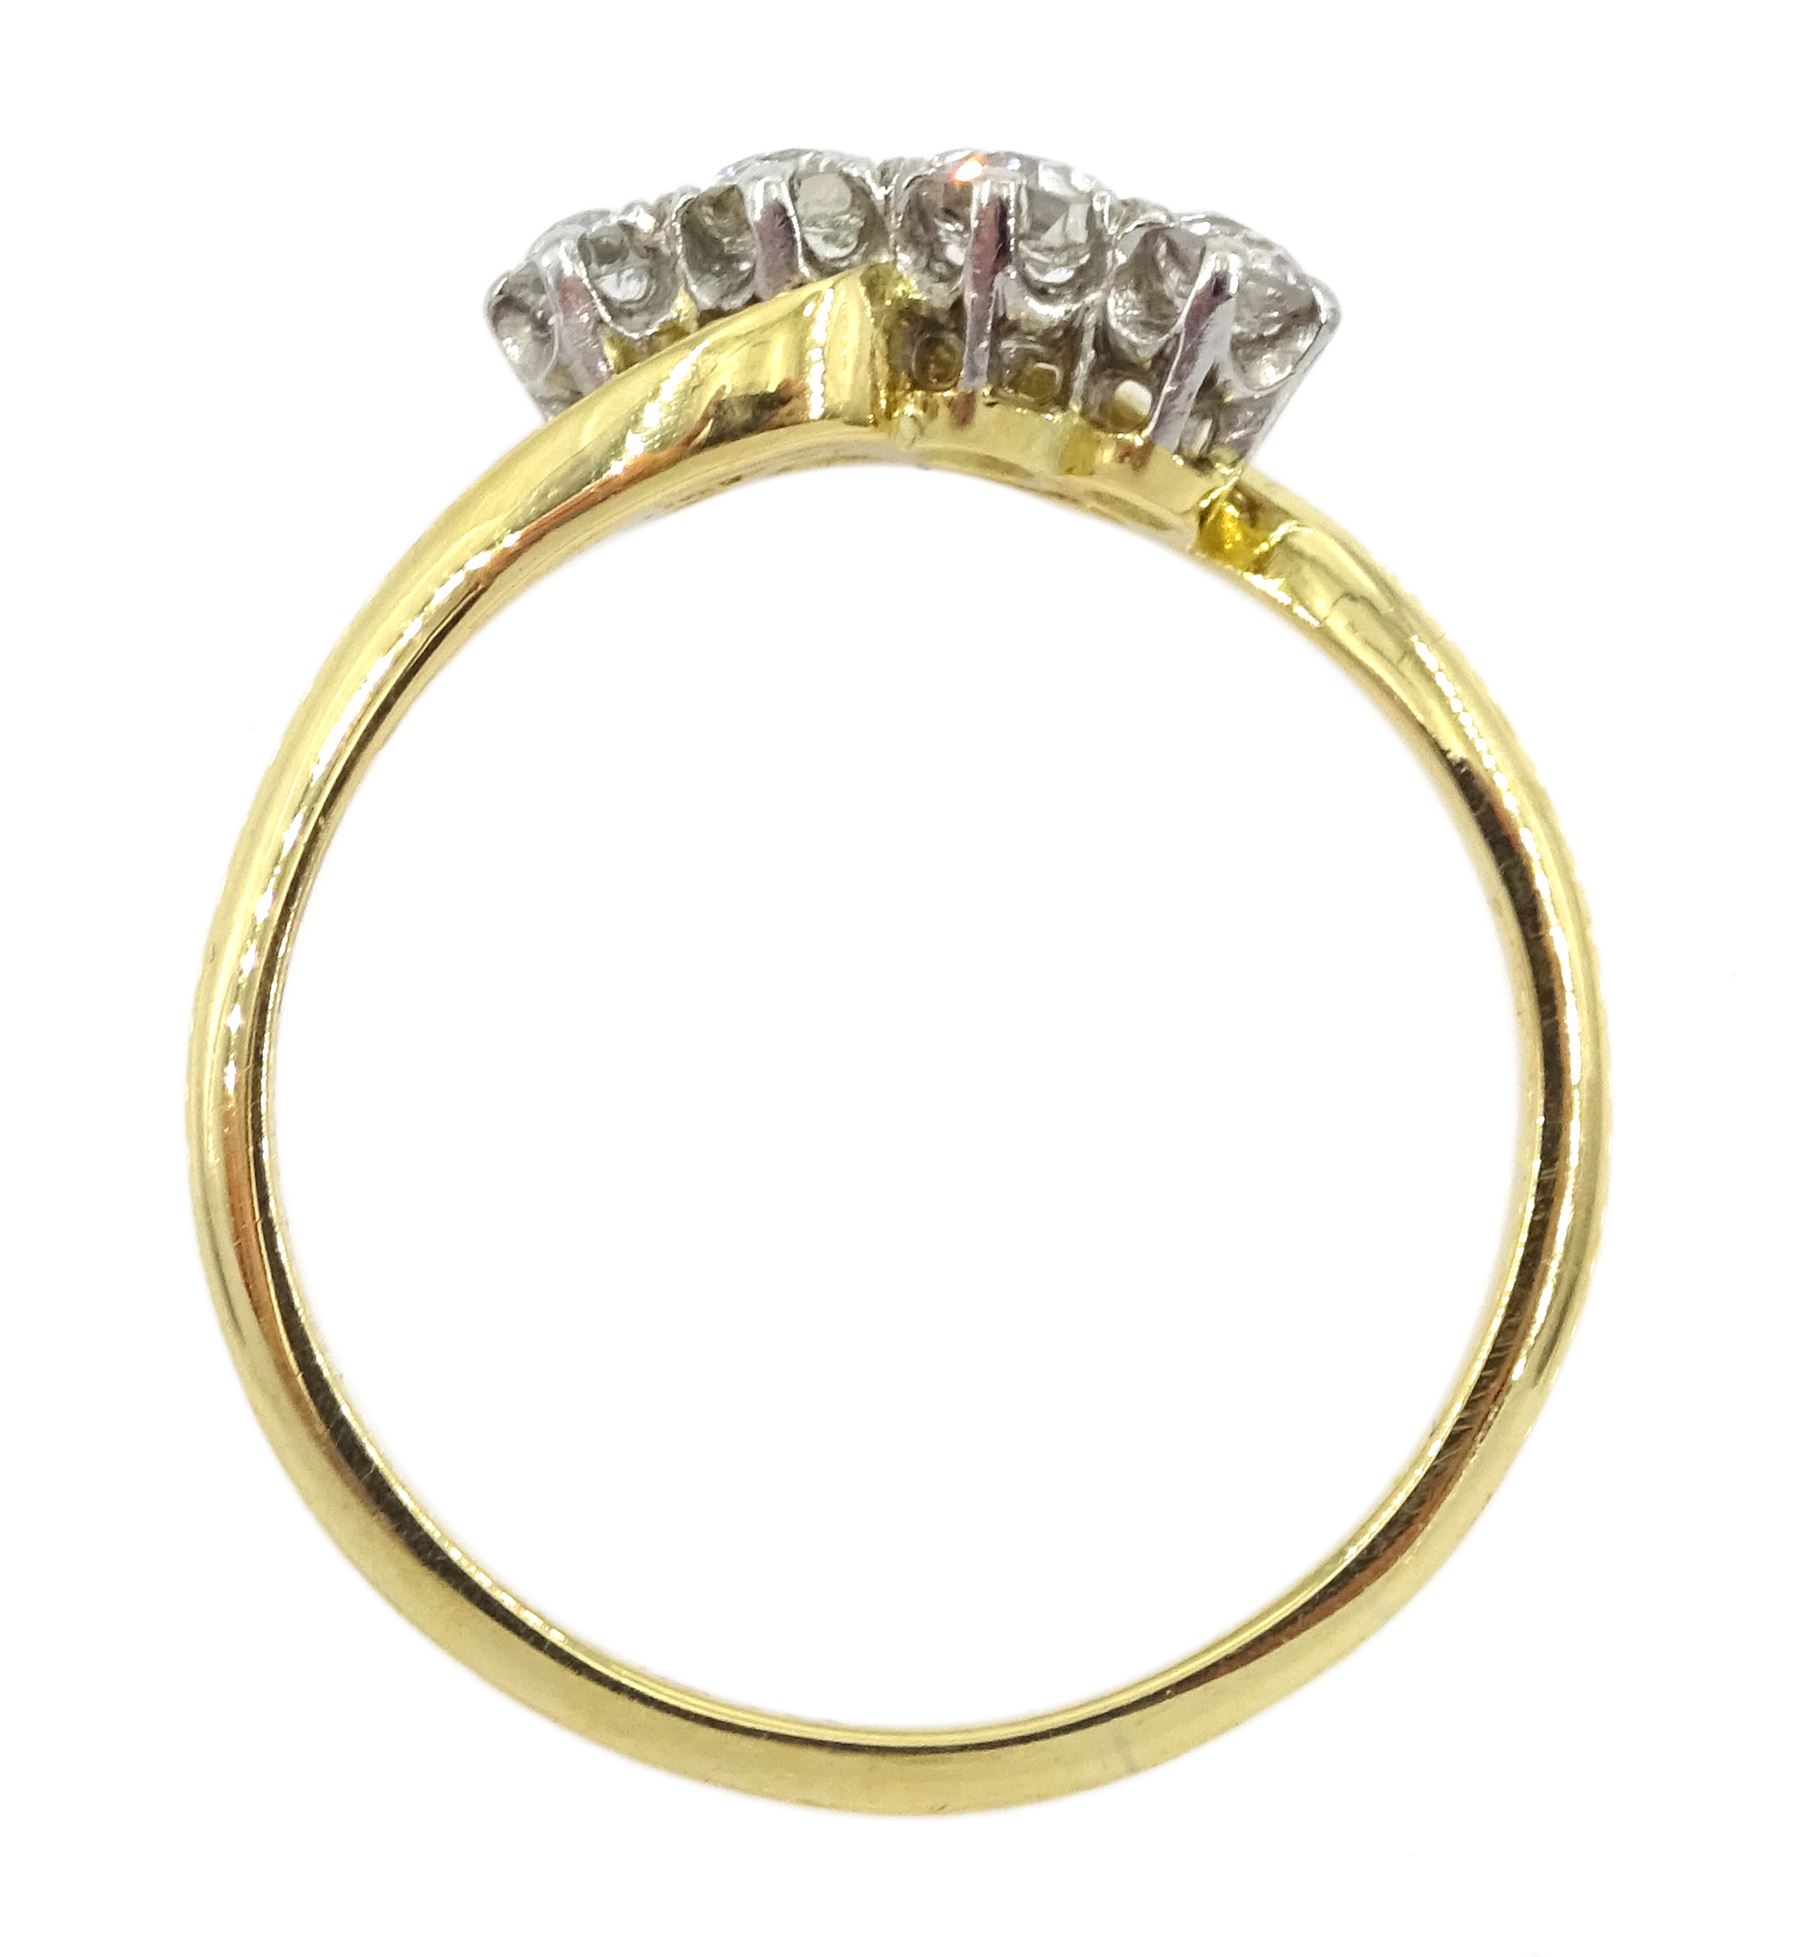 18ct gold four stone diamond ring - Image 4 of 4